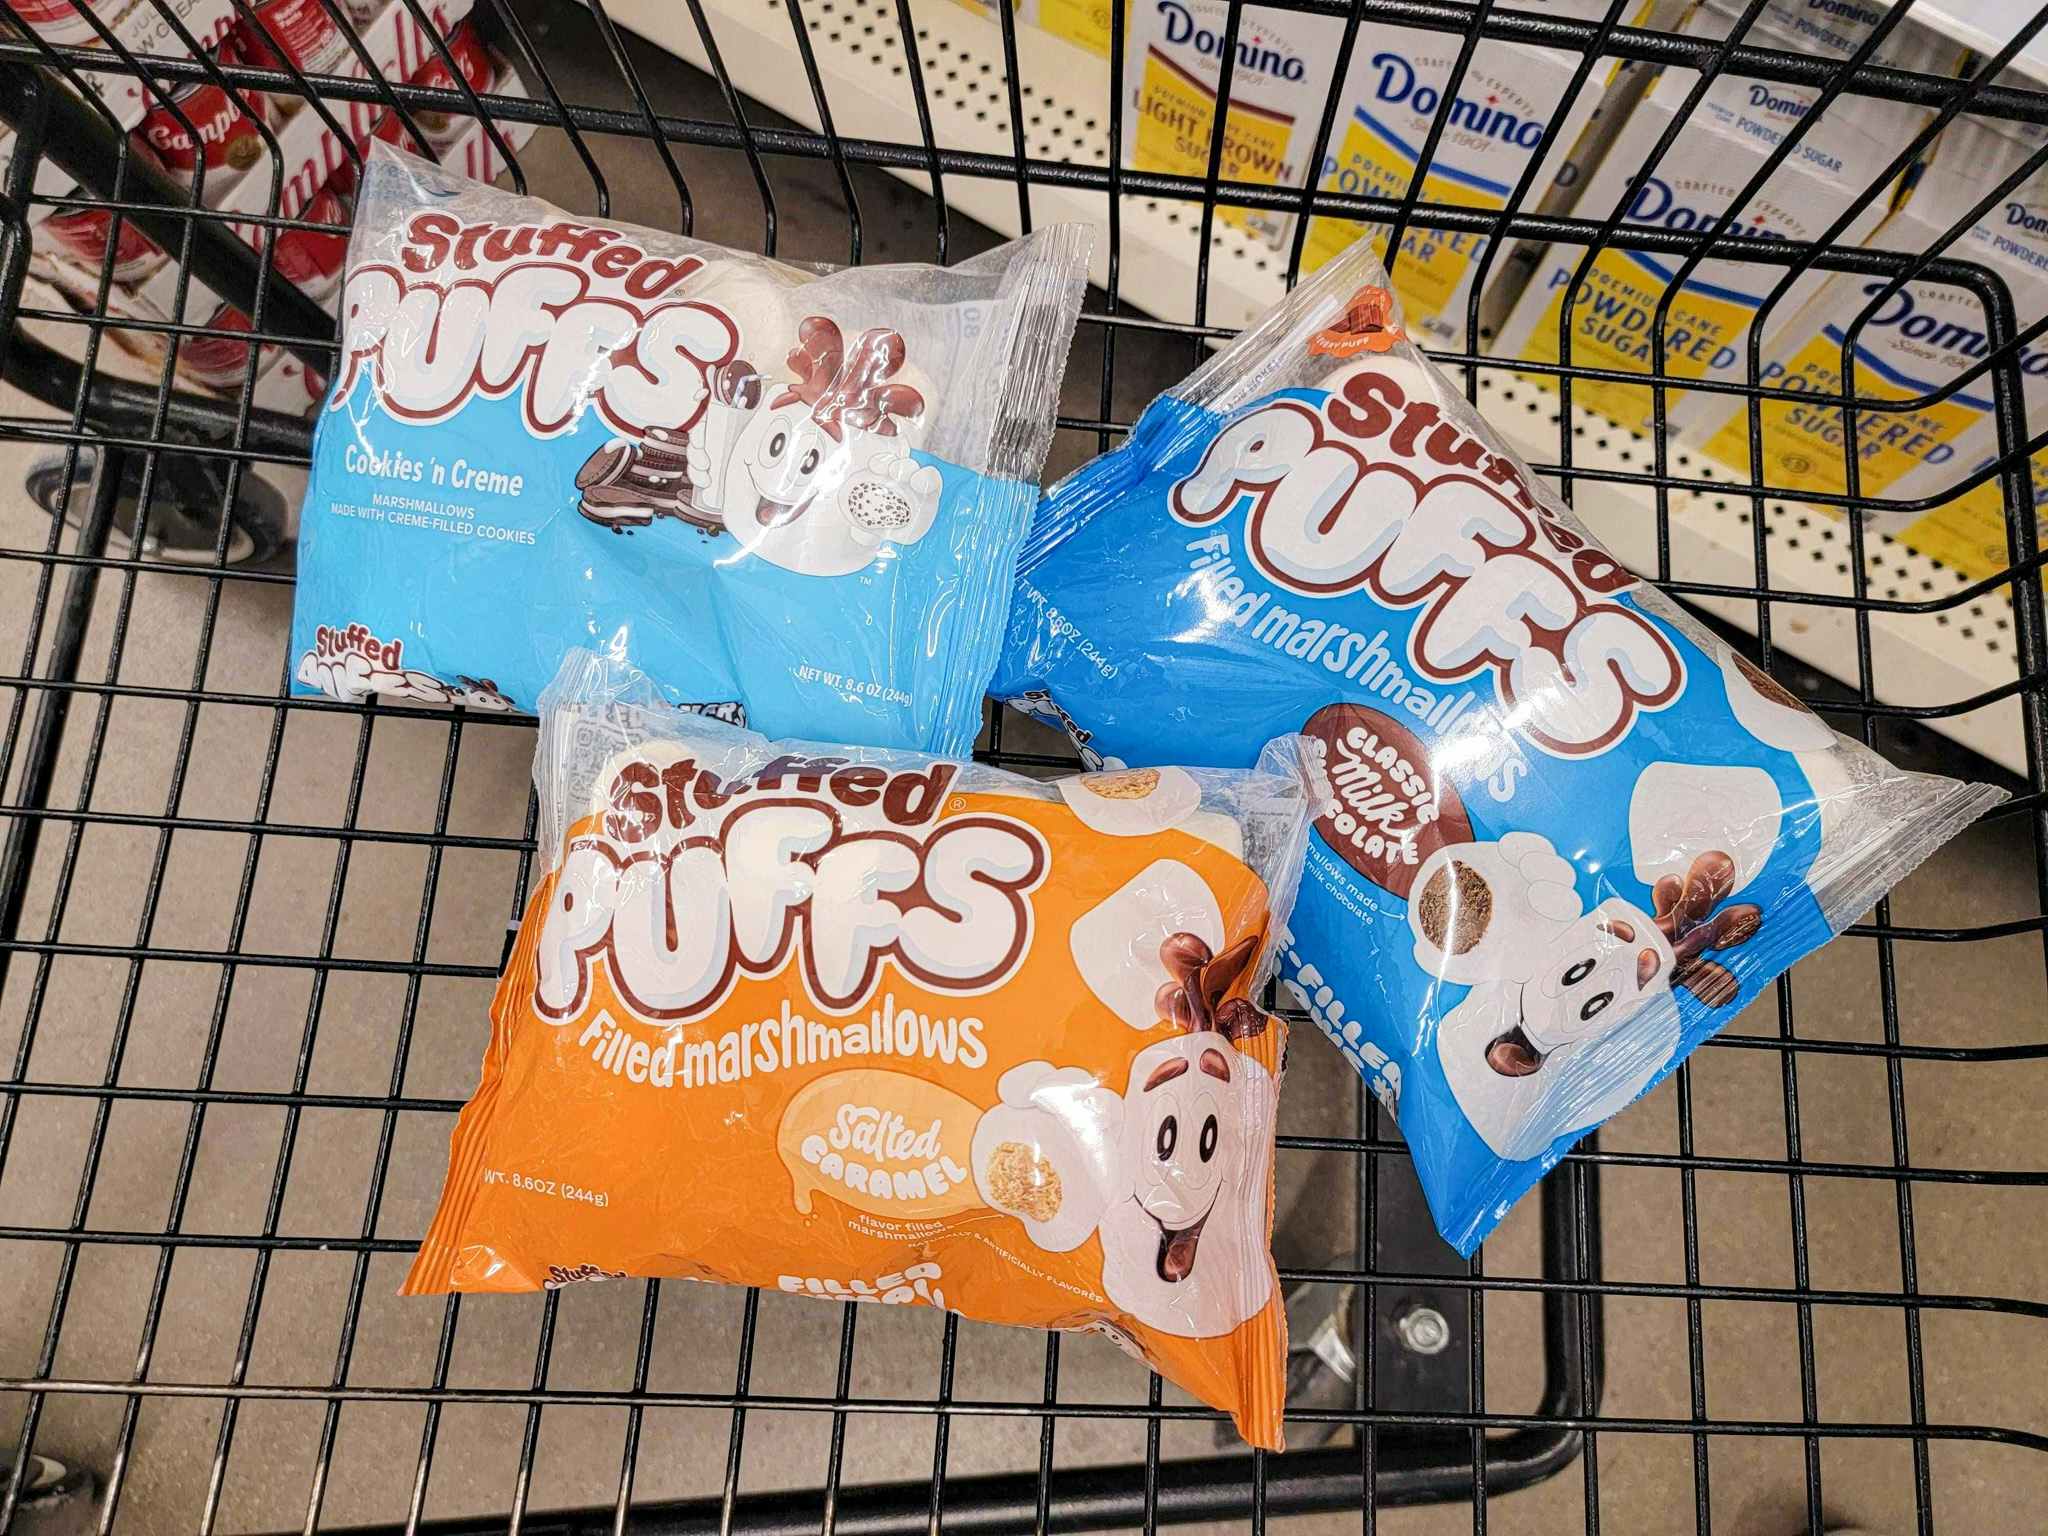 stuffed puffs marshmallows in a cart